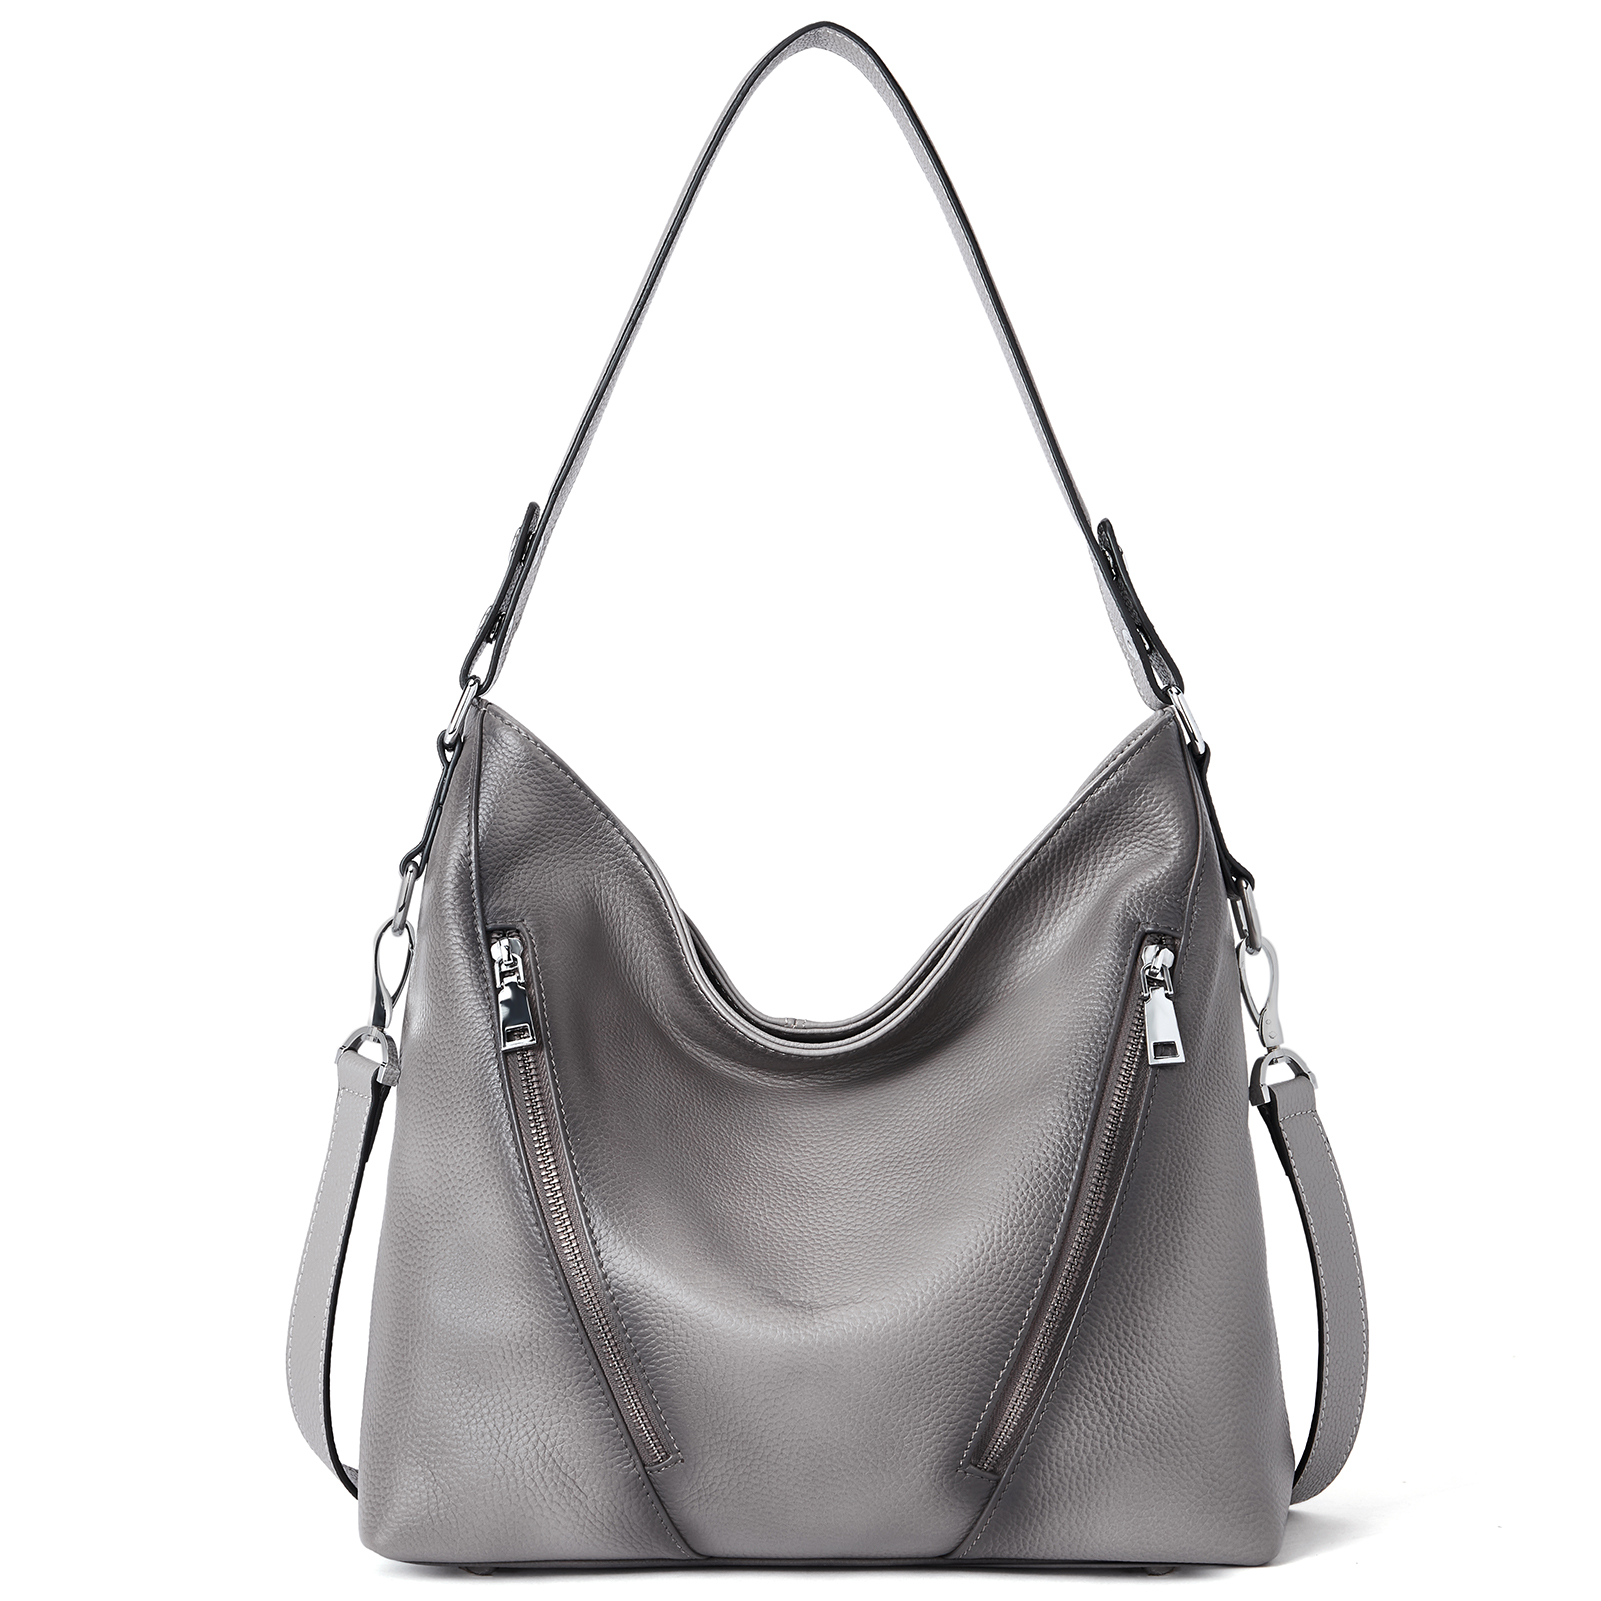 BOSTANTEN Women Leather Handbag Designer Large Hobo Purses Shoulder Bags 